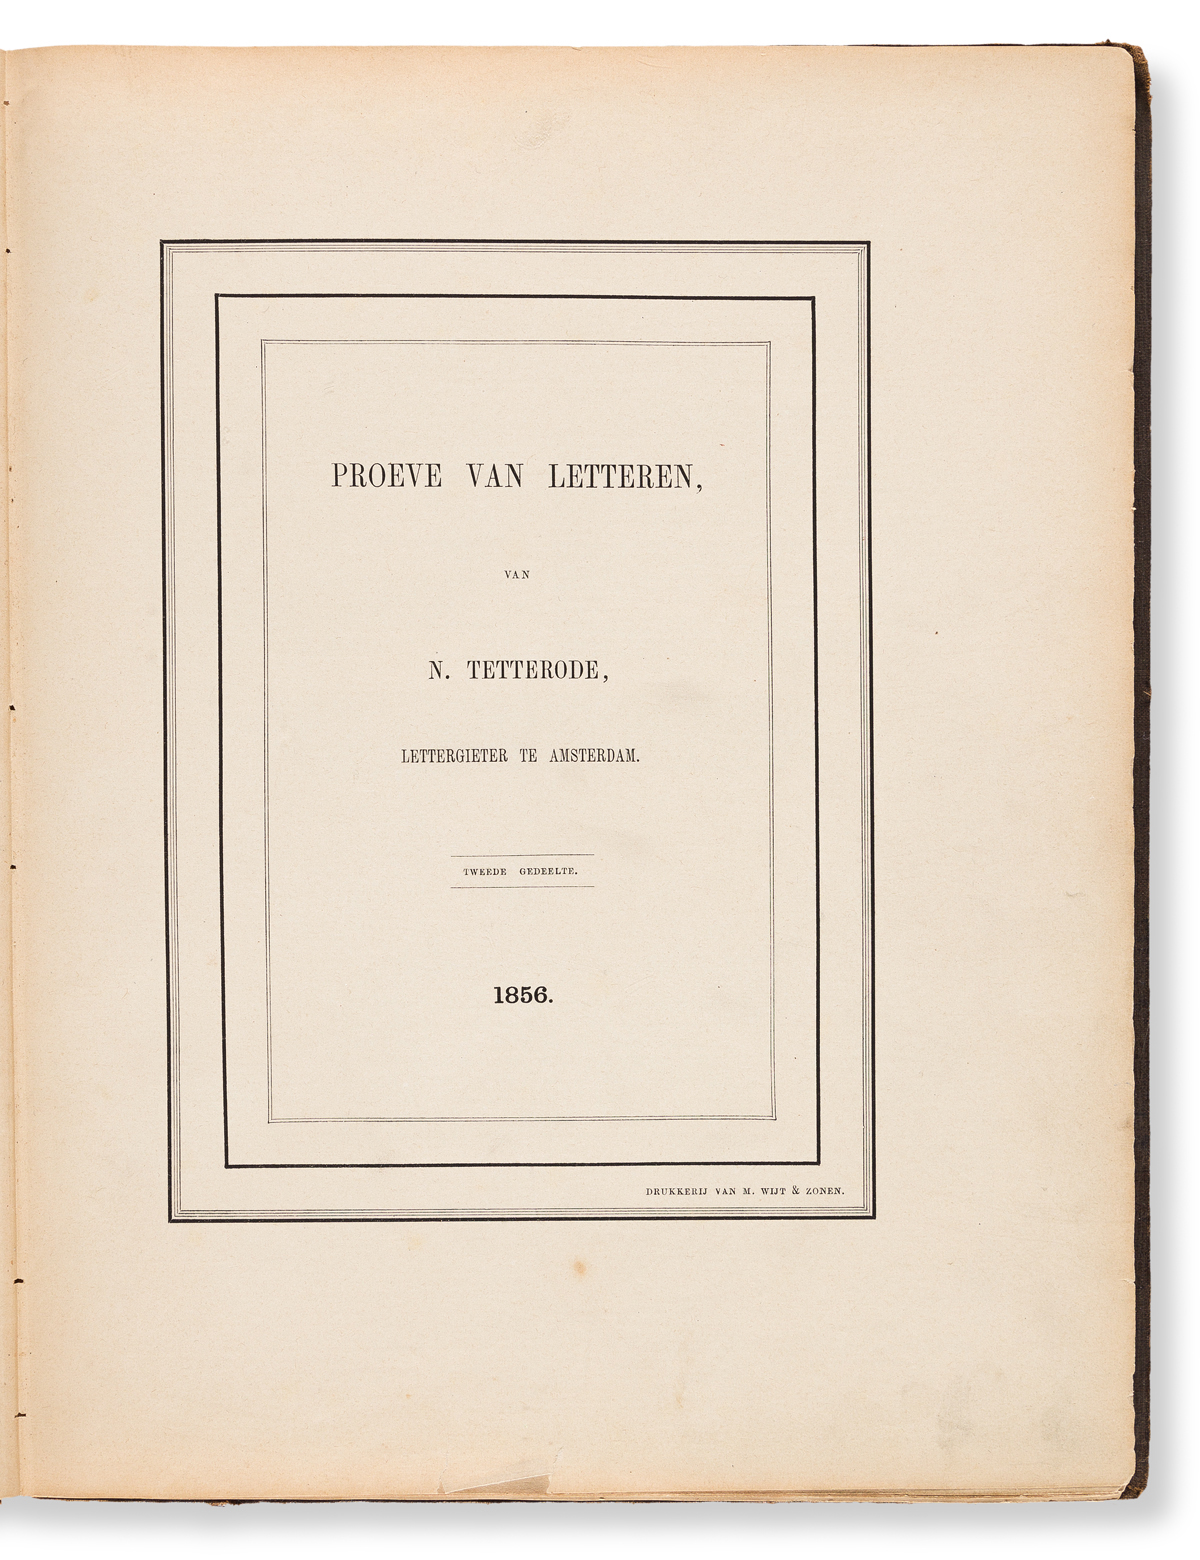 [SPECIMEN BOOK — N. TETTERODE]. Proeve van Letteren, van N. Tetterode, Lettergieter te Amsterdam, Tweed Gedeelte (Second Section). Rott